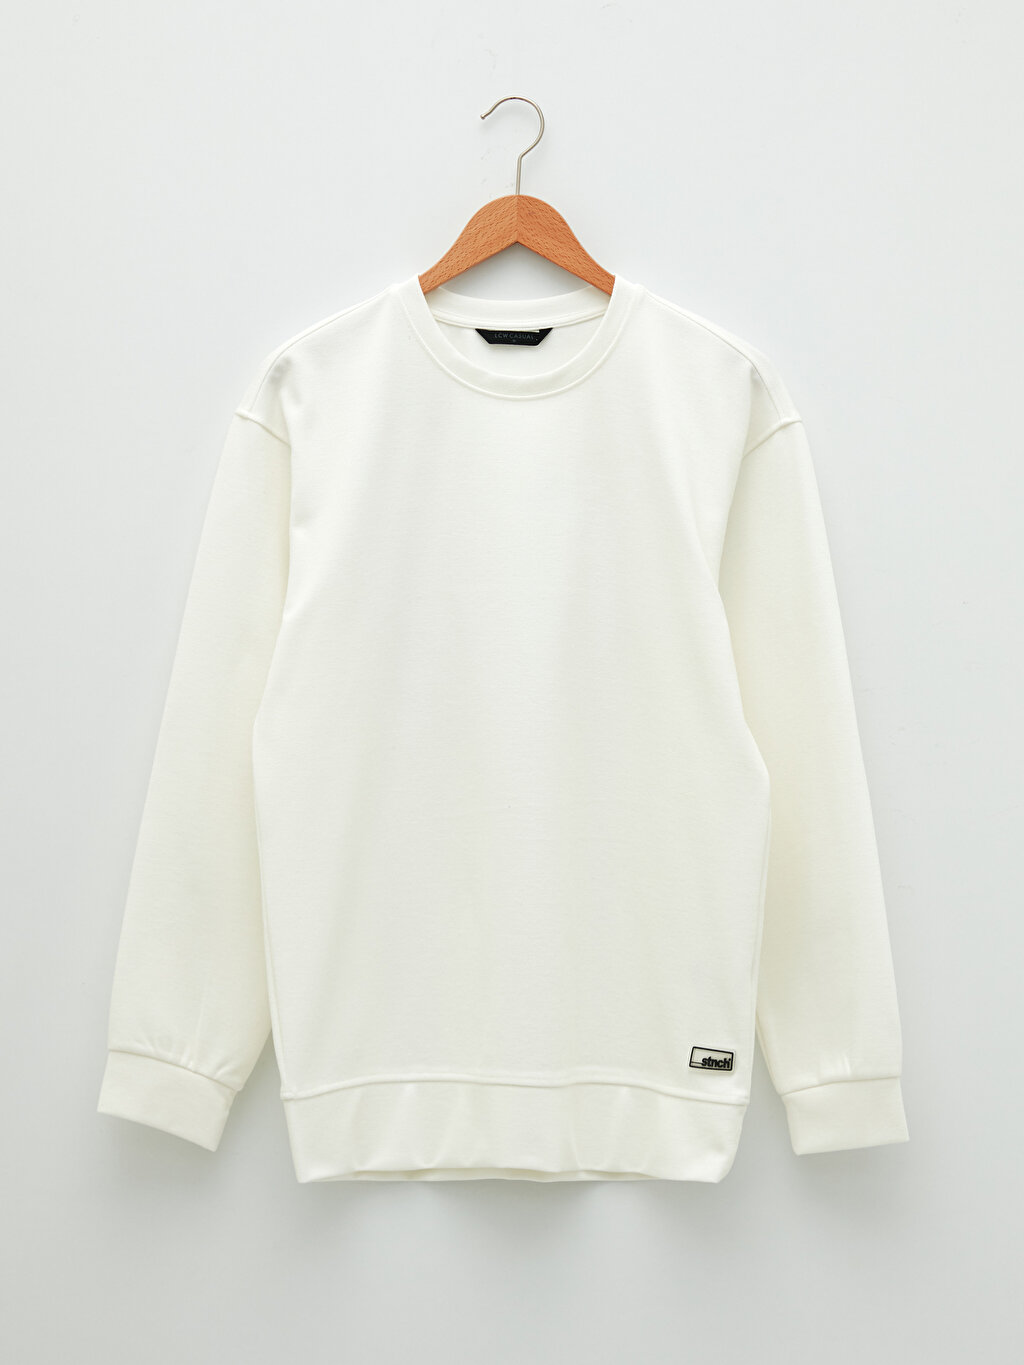 WOMEN FASHION Jumpers & Sweatshirts Hoodless Zara jumper discount 74% White L 